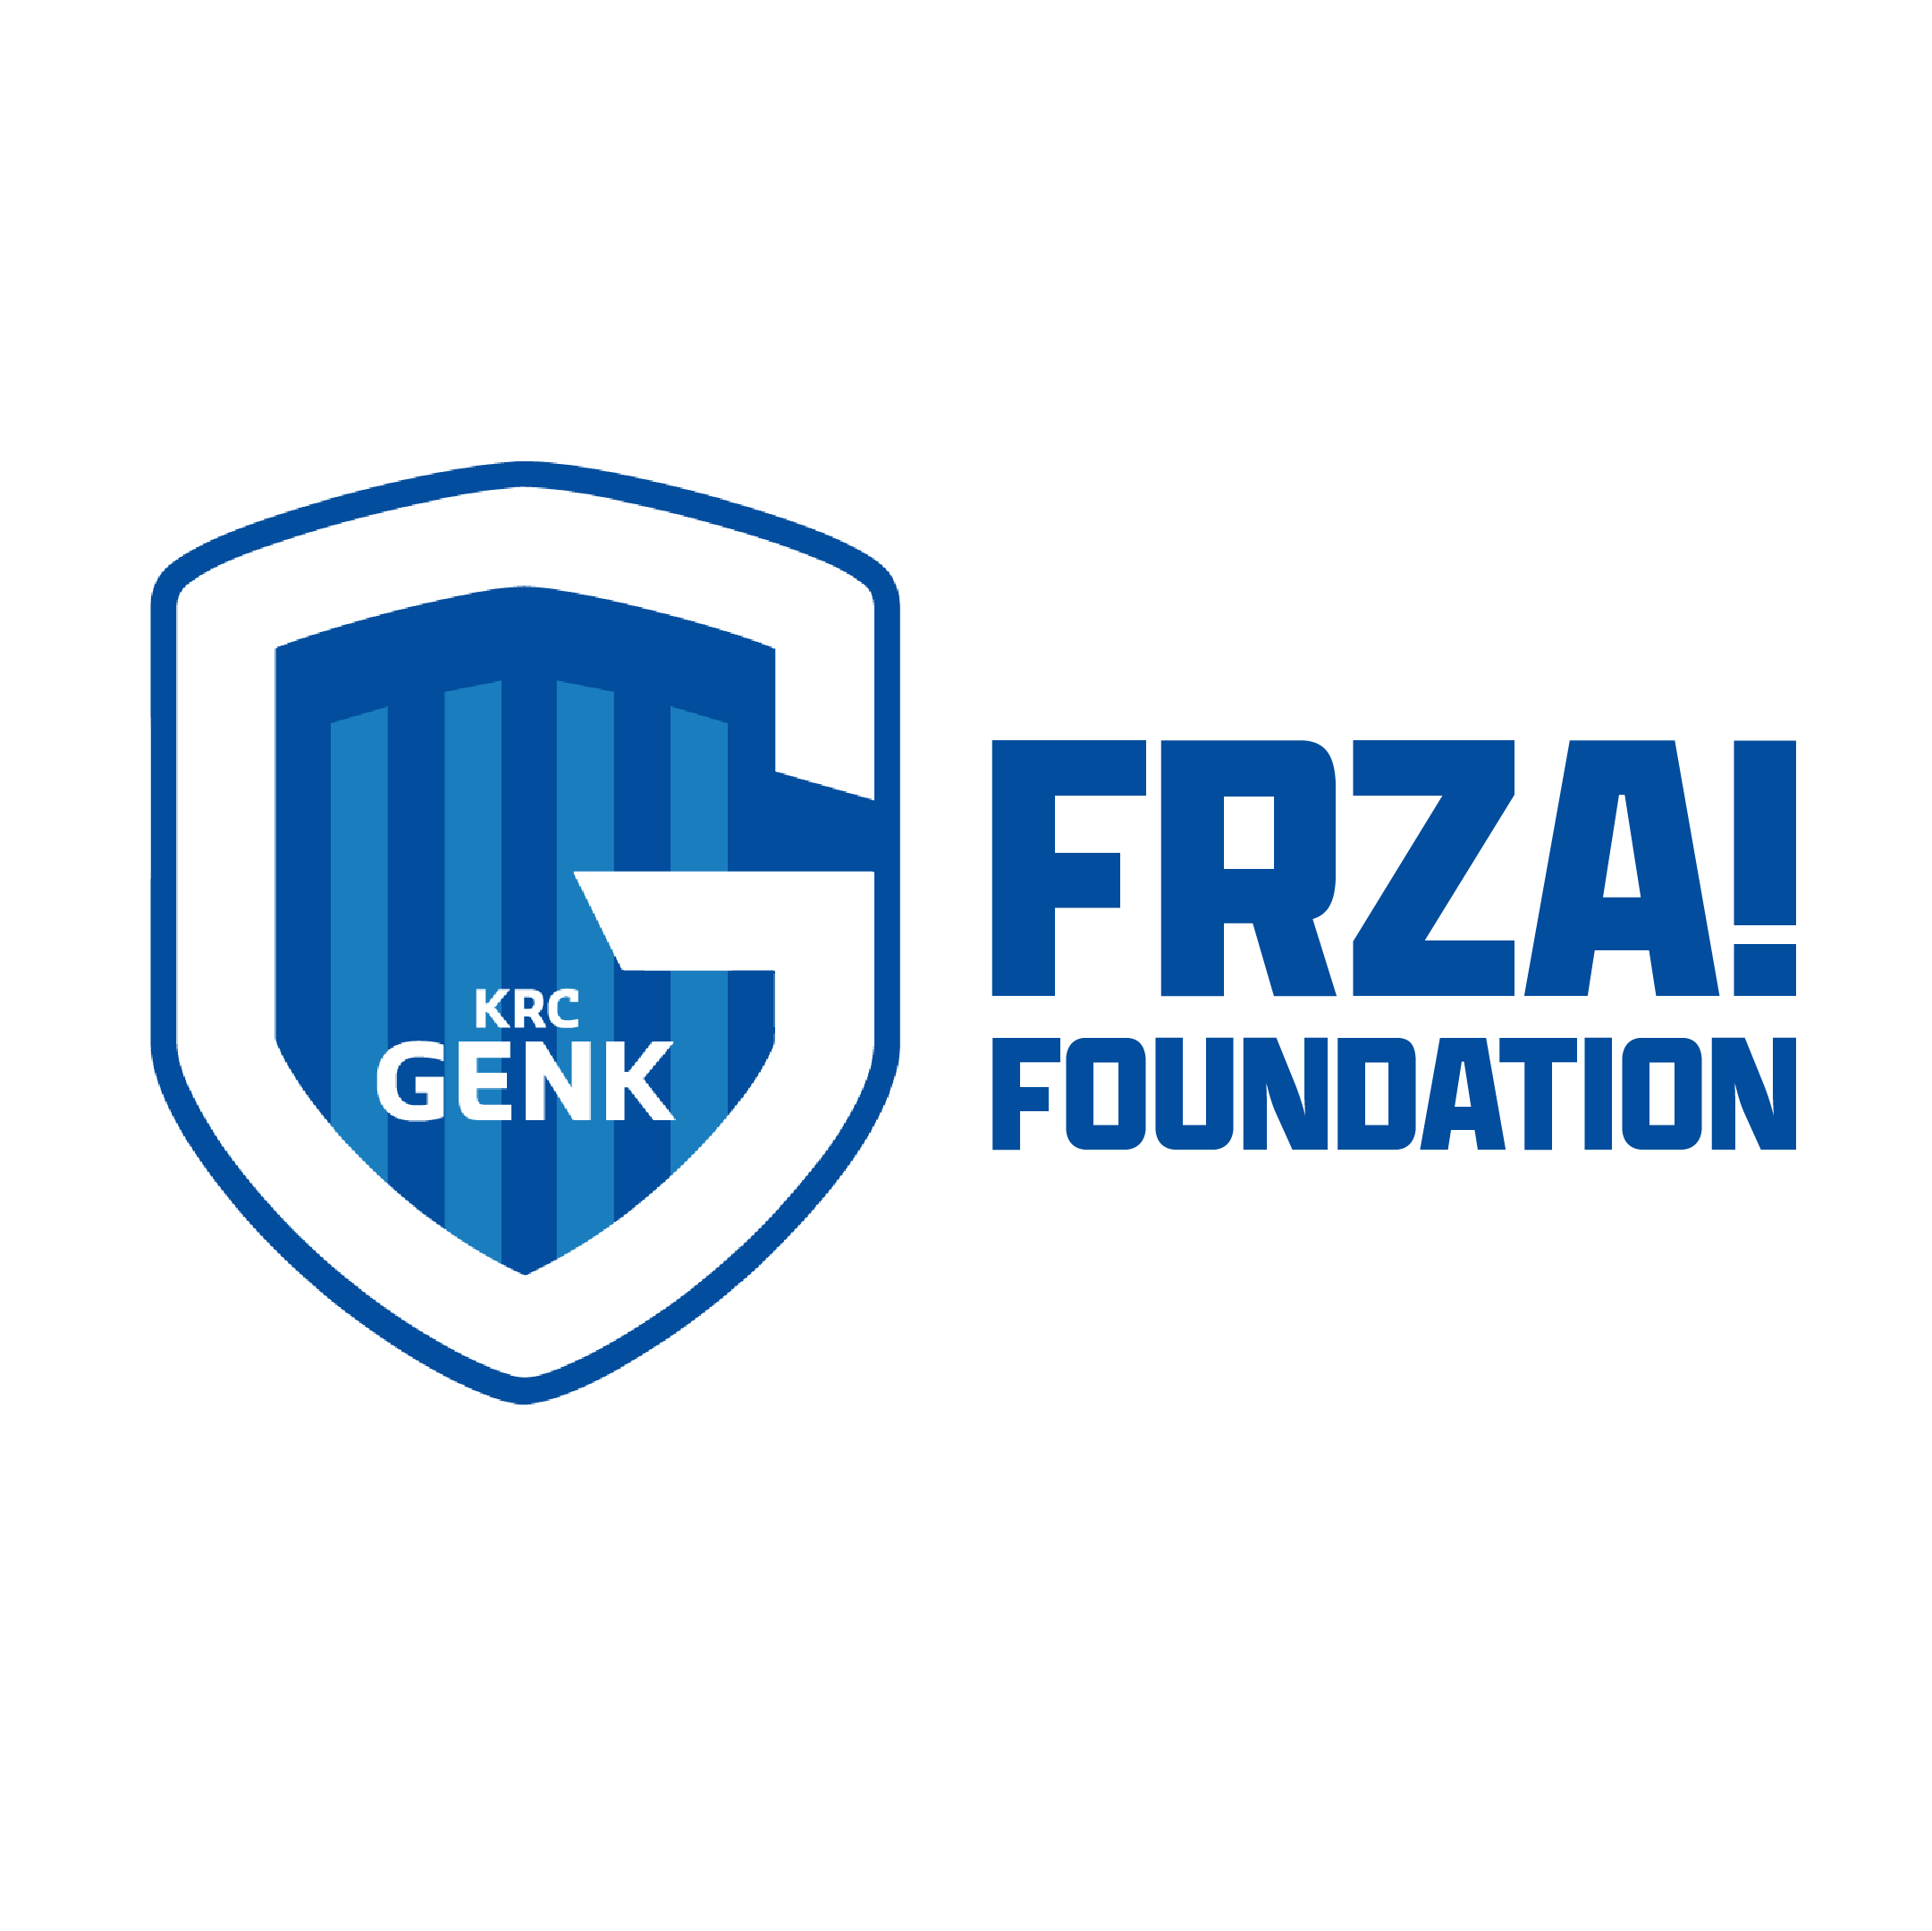 KRC Genk FRZA! Foundation